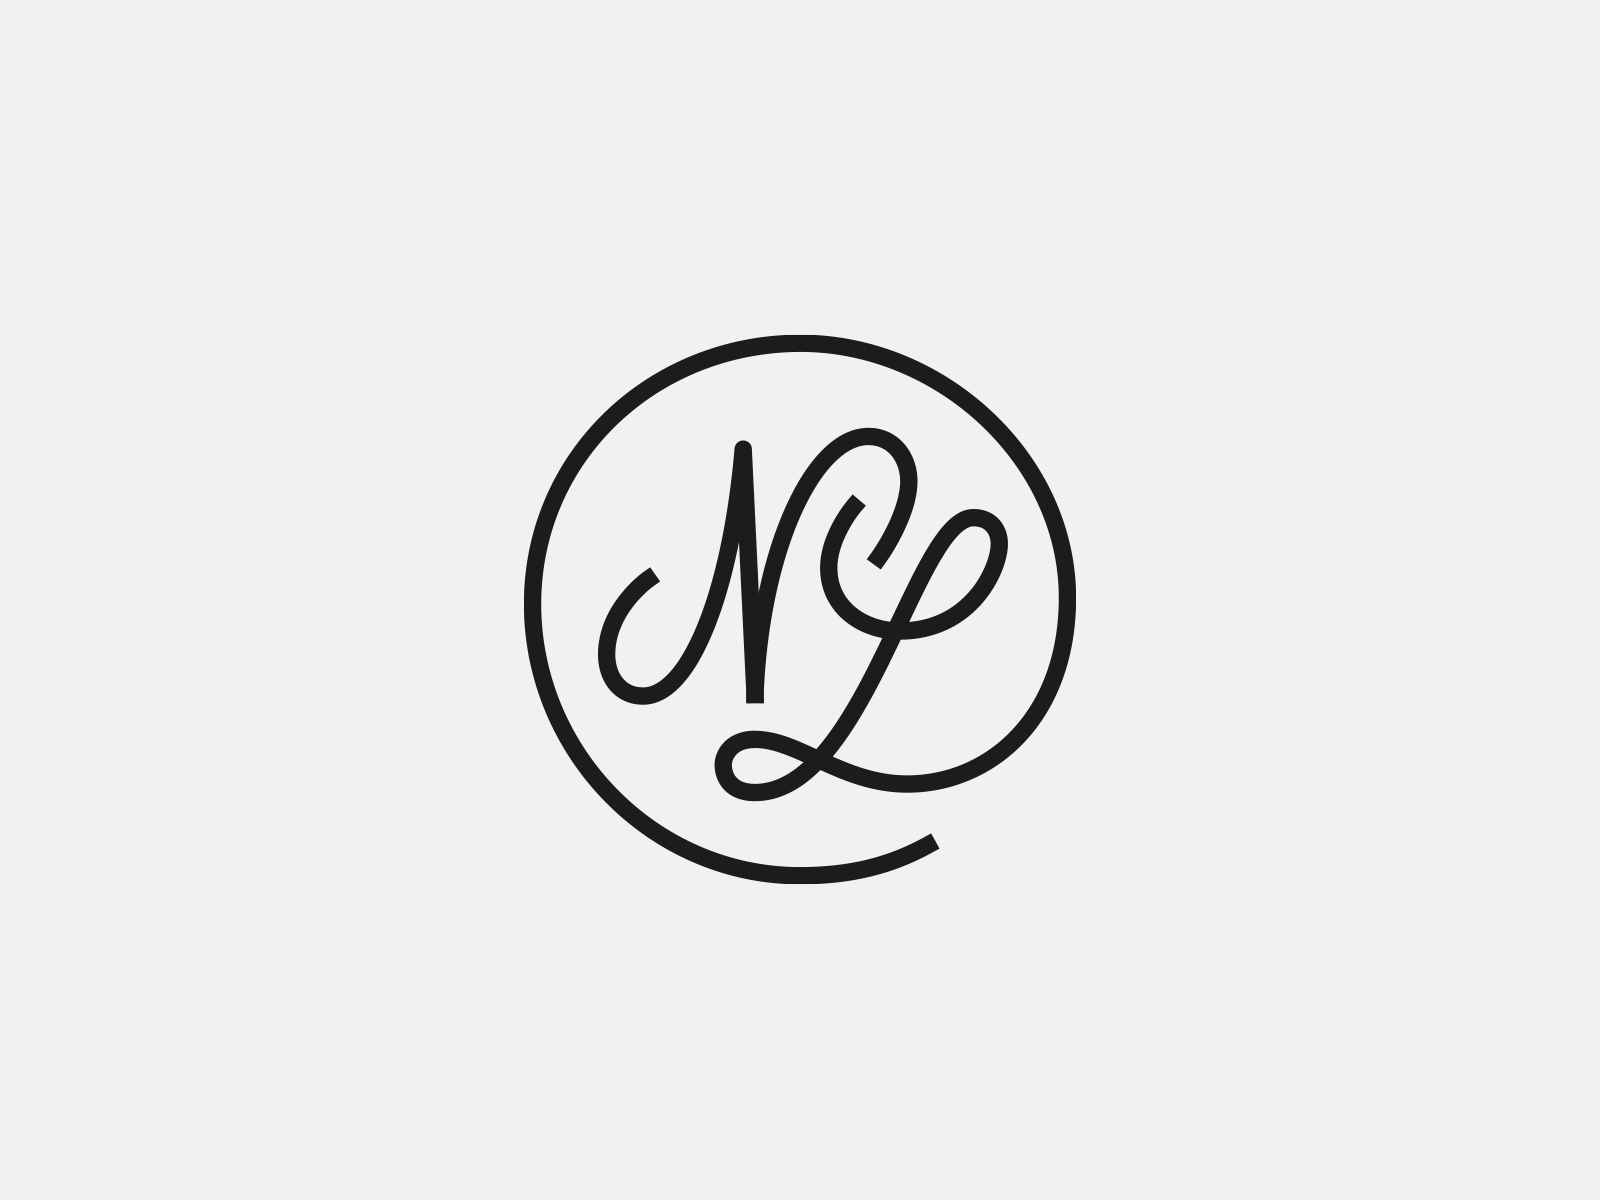 Nl modern letter logo design with swoosh Vector Image